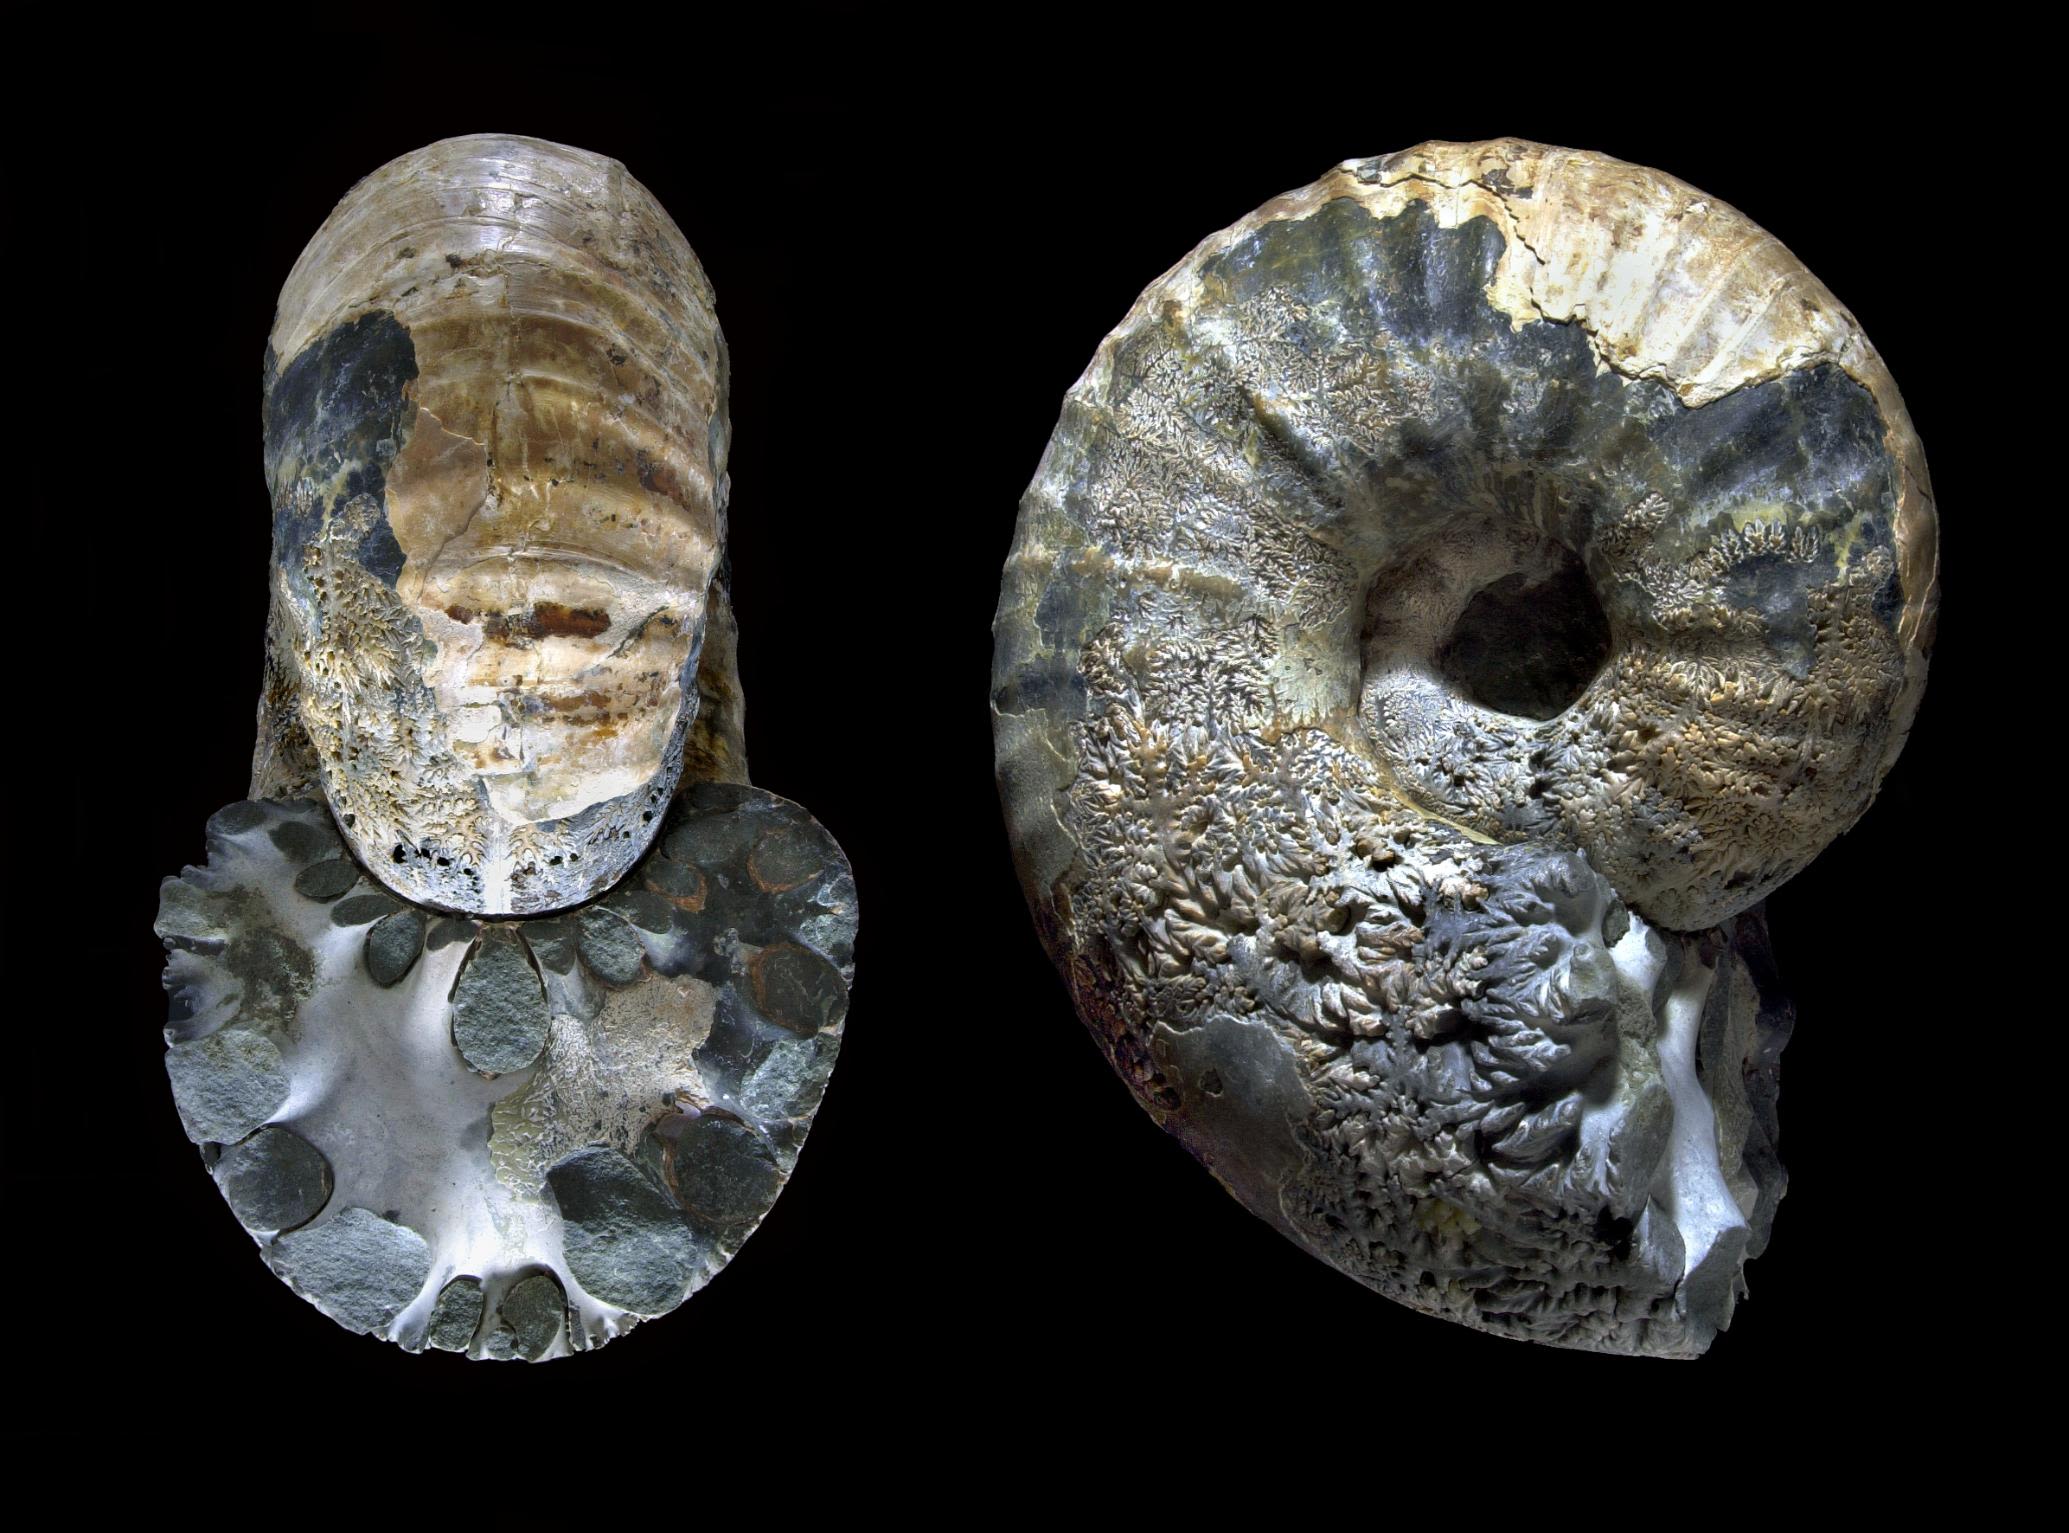 cretaceous period fossils